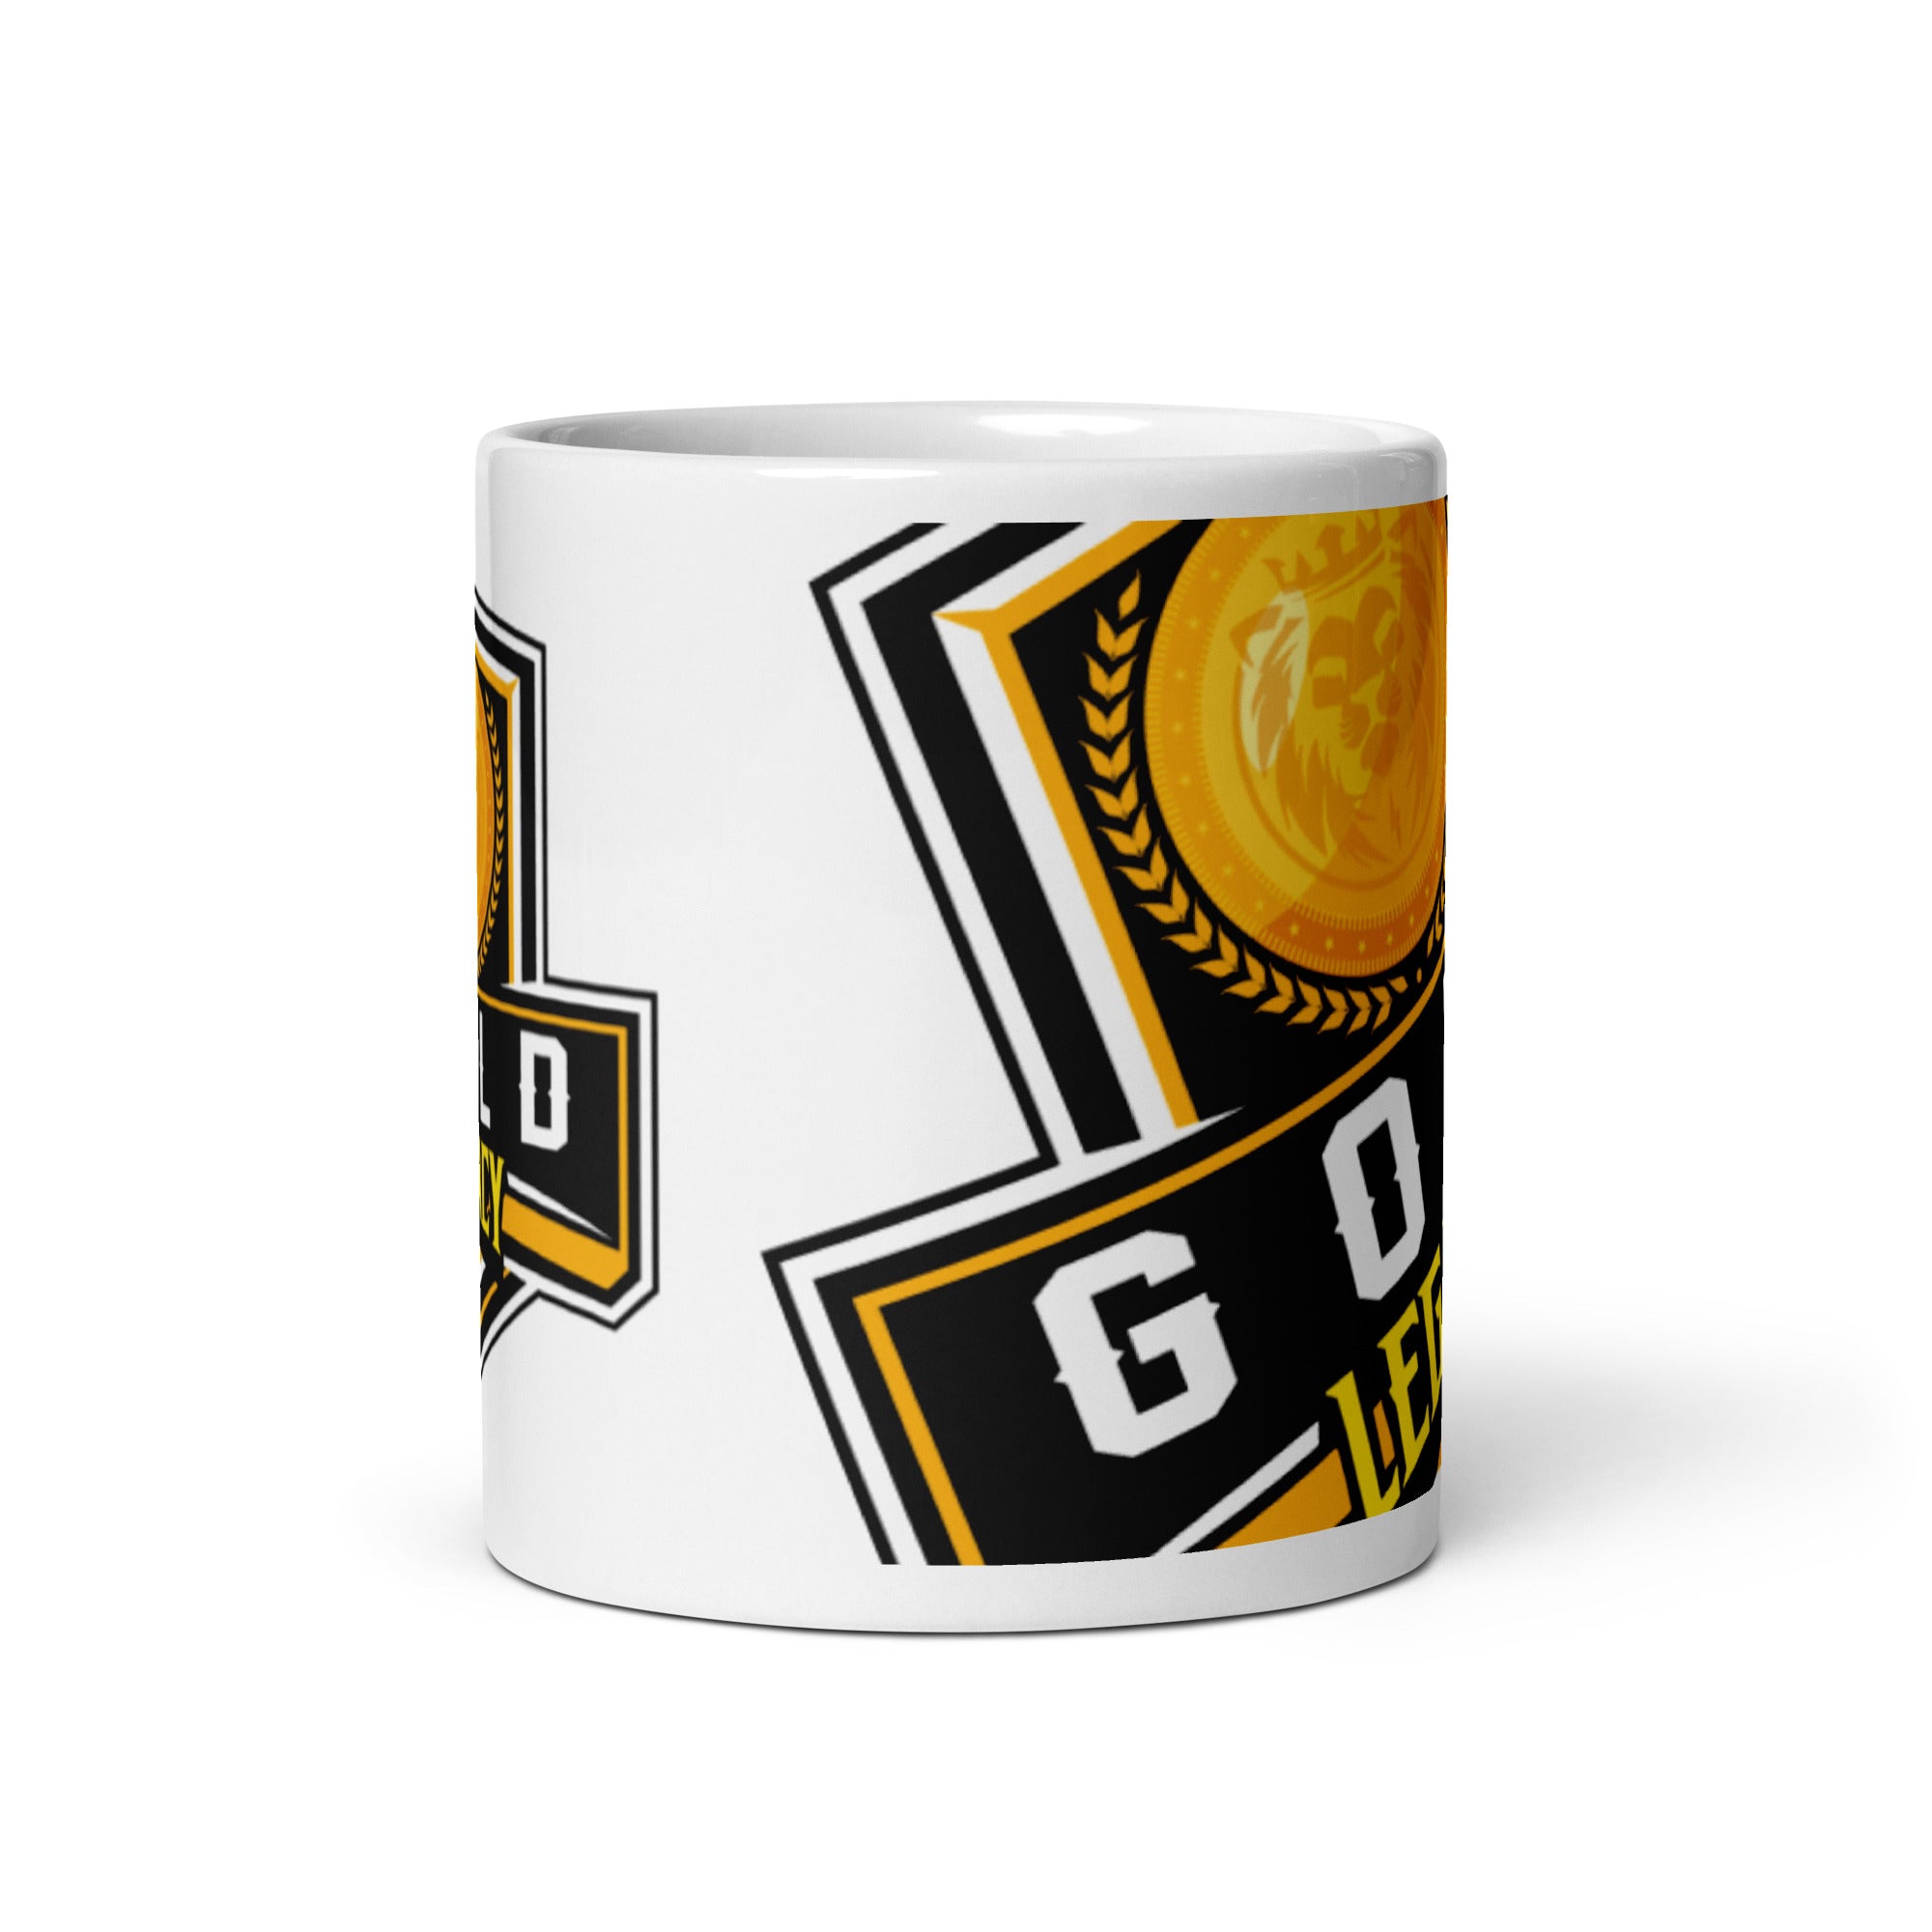 Gold White glossy mug